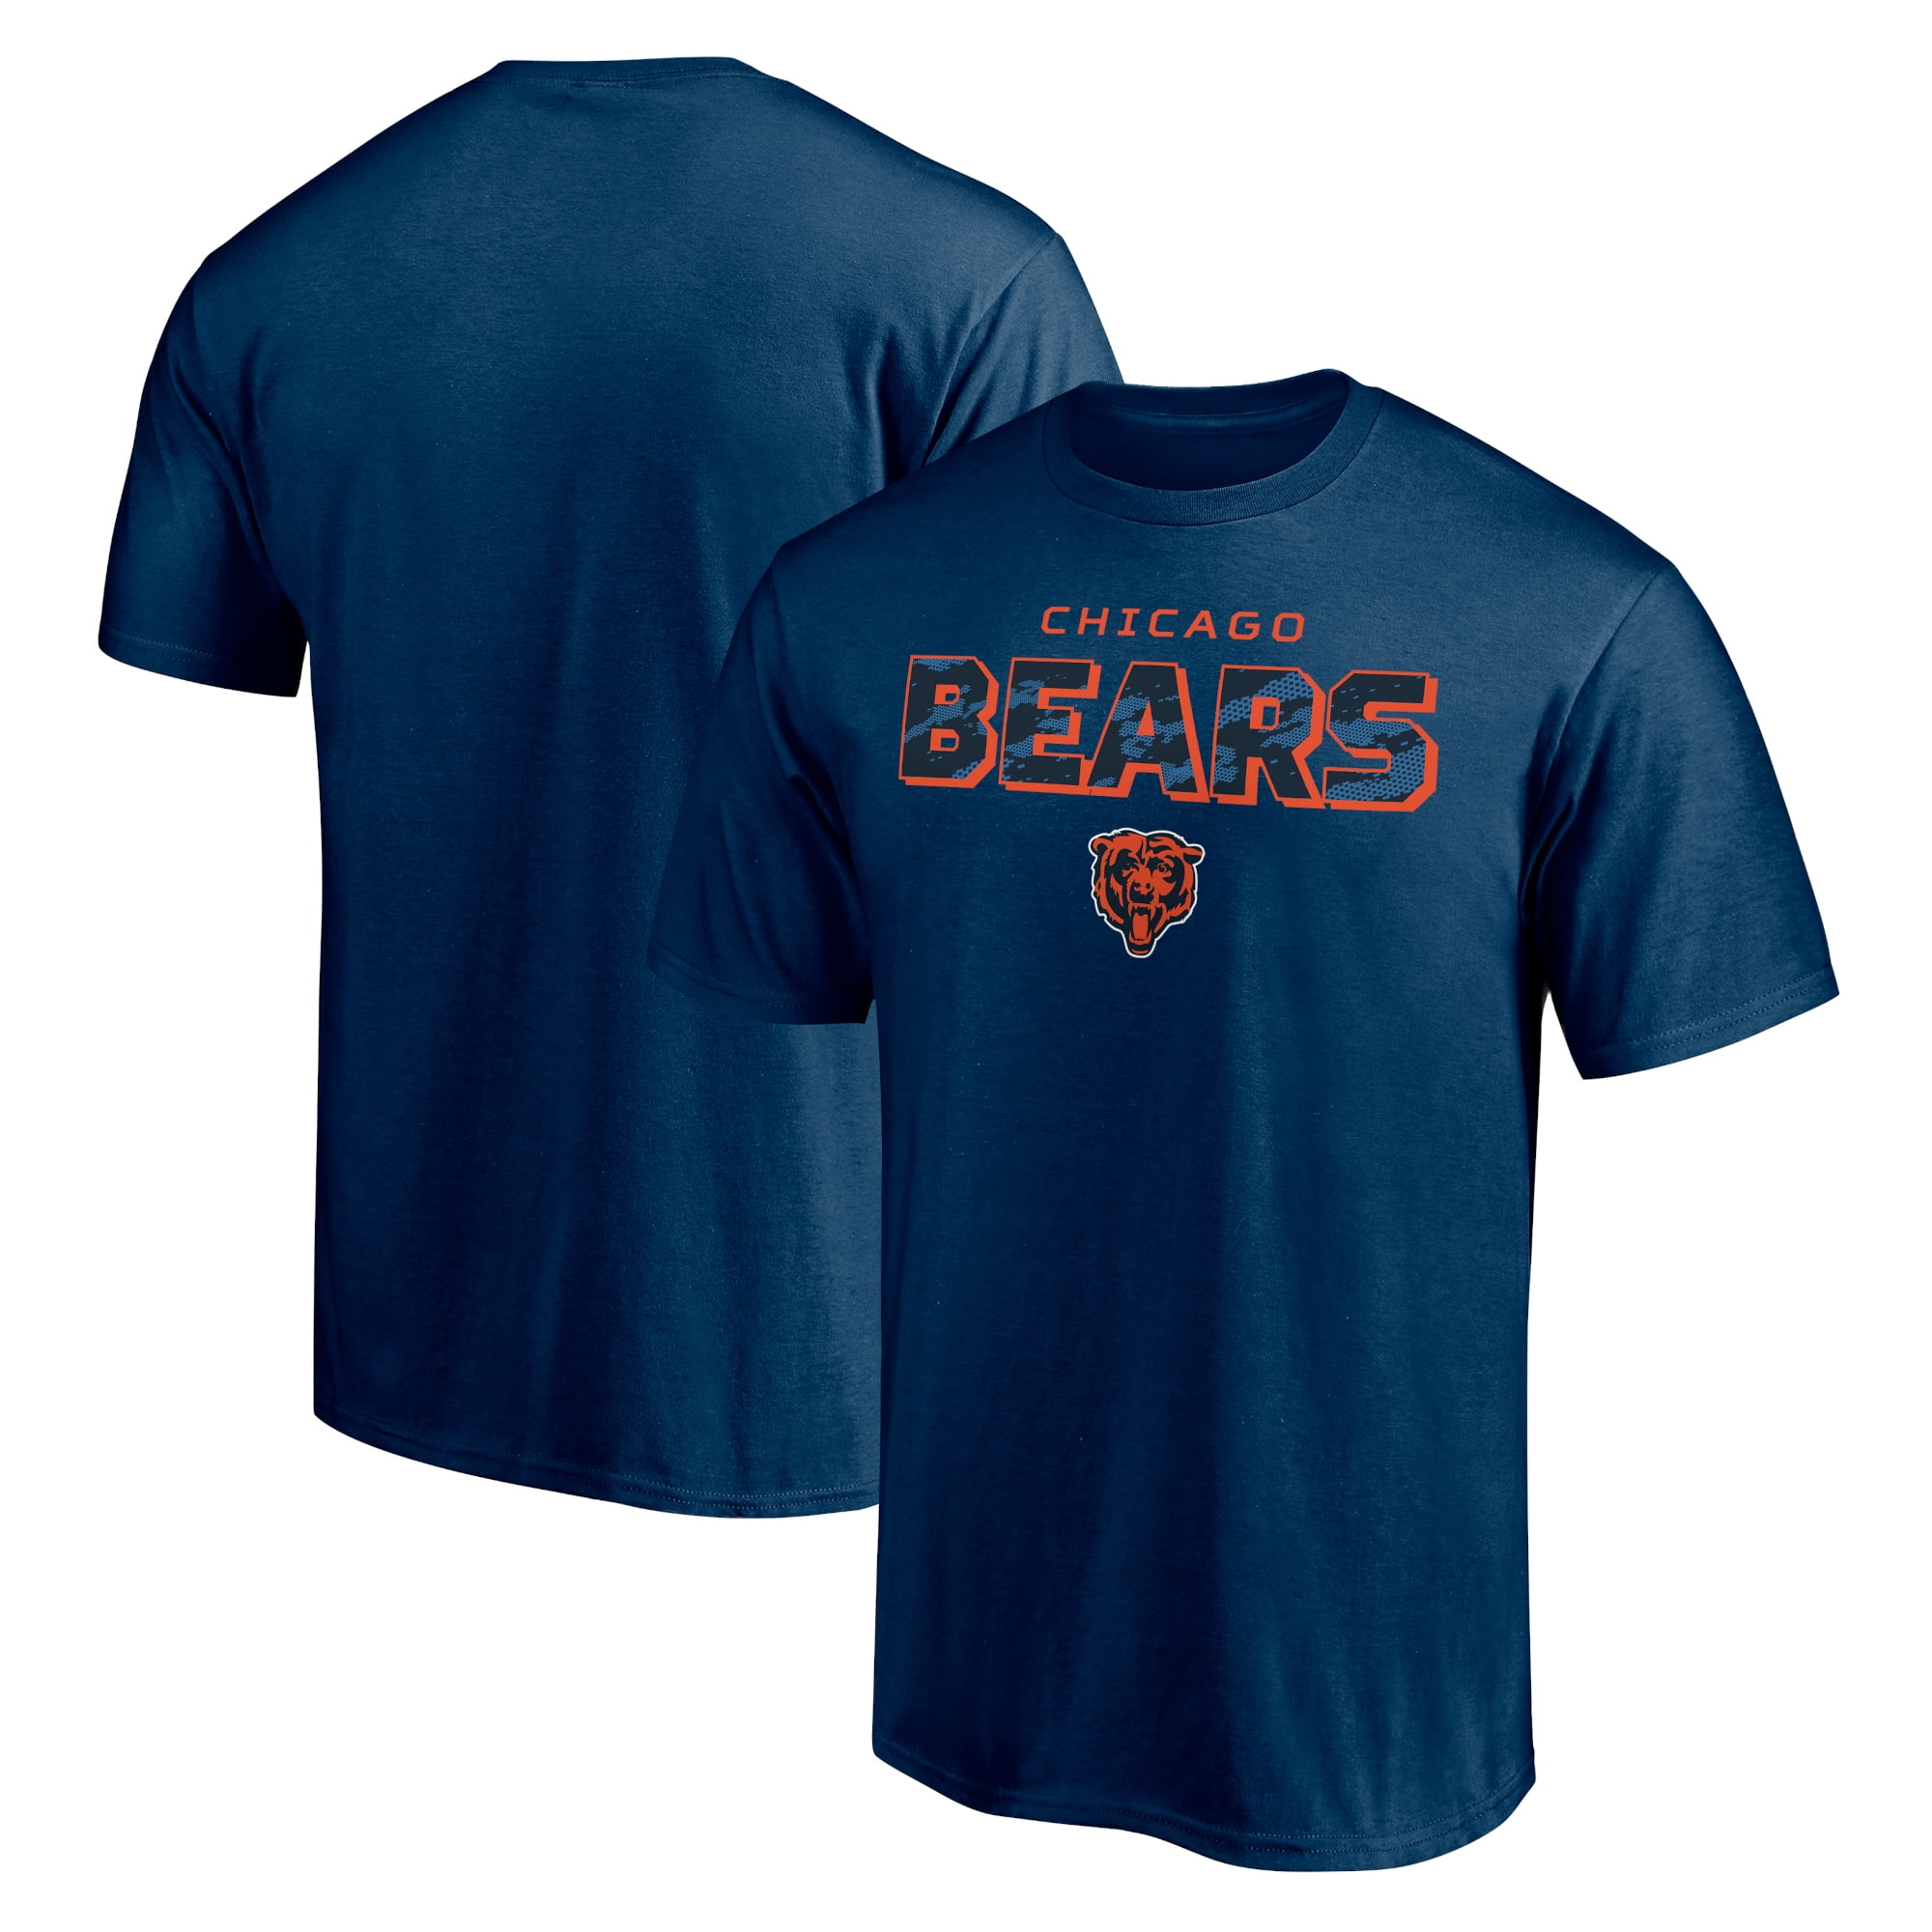 bears shirts target